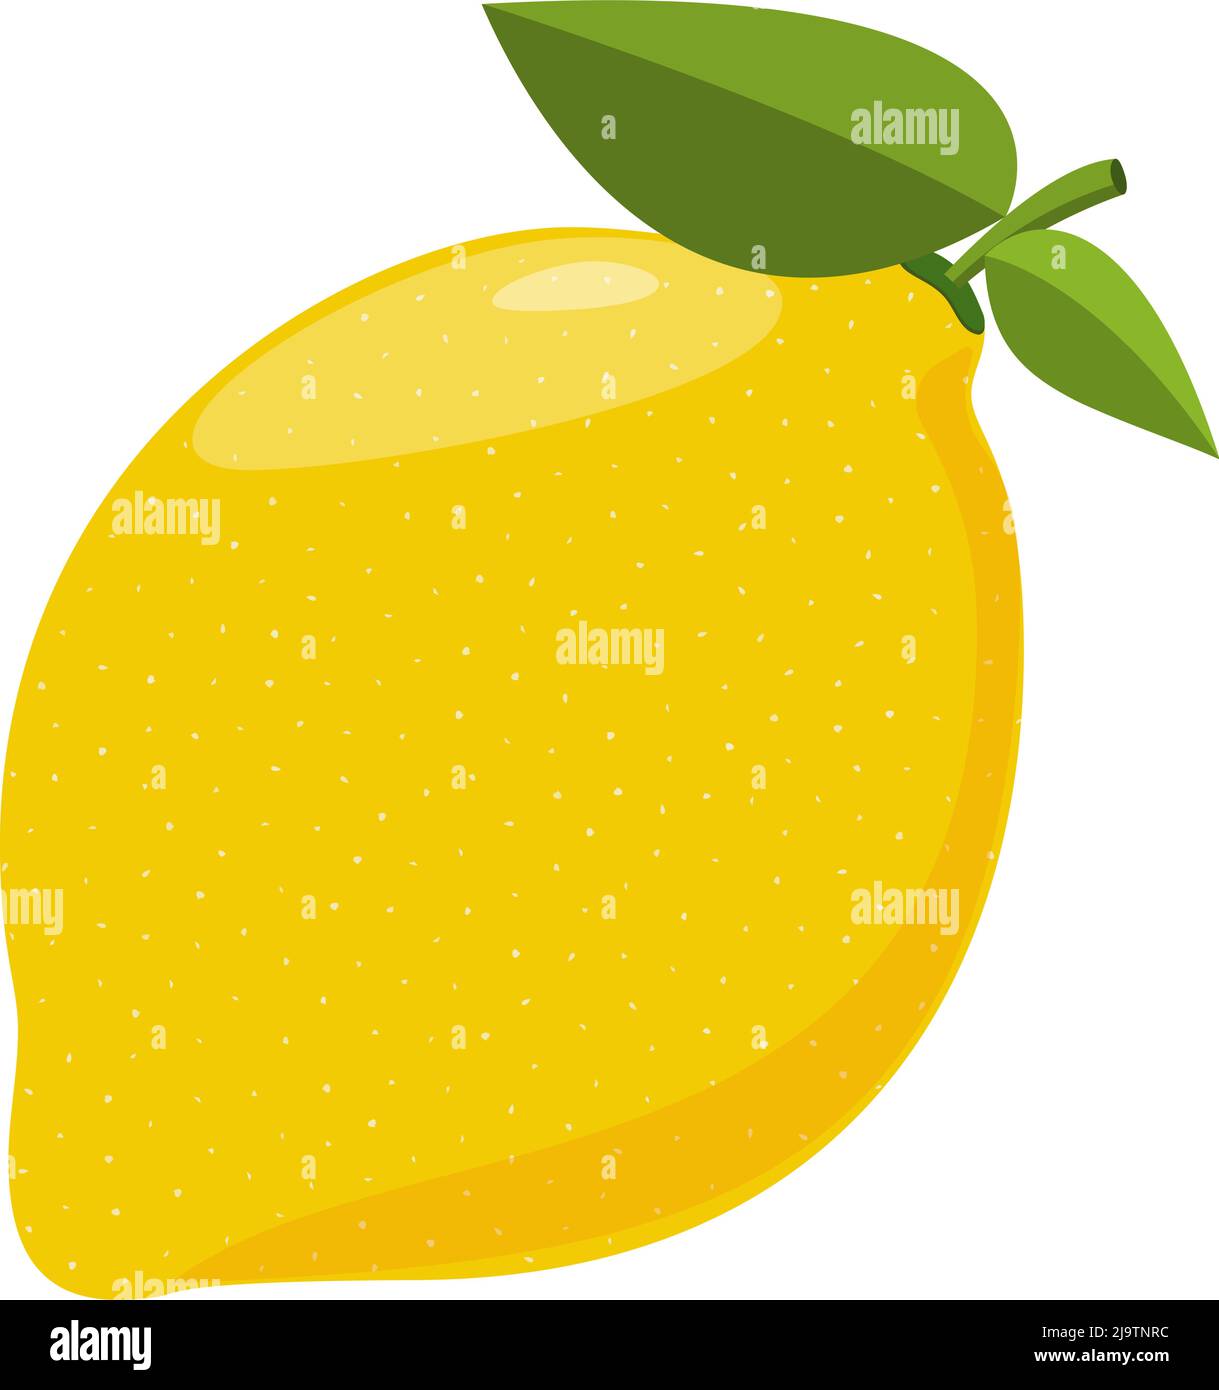 yellow lemon fruit isolated on white background, flat design vector illustration Stock Vector